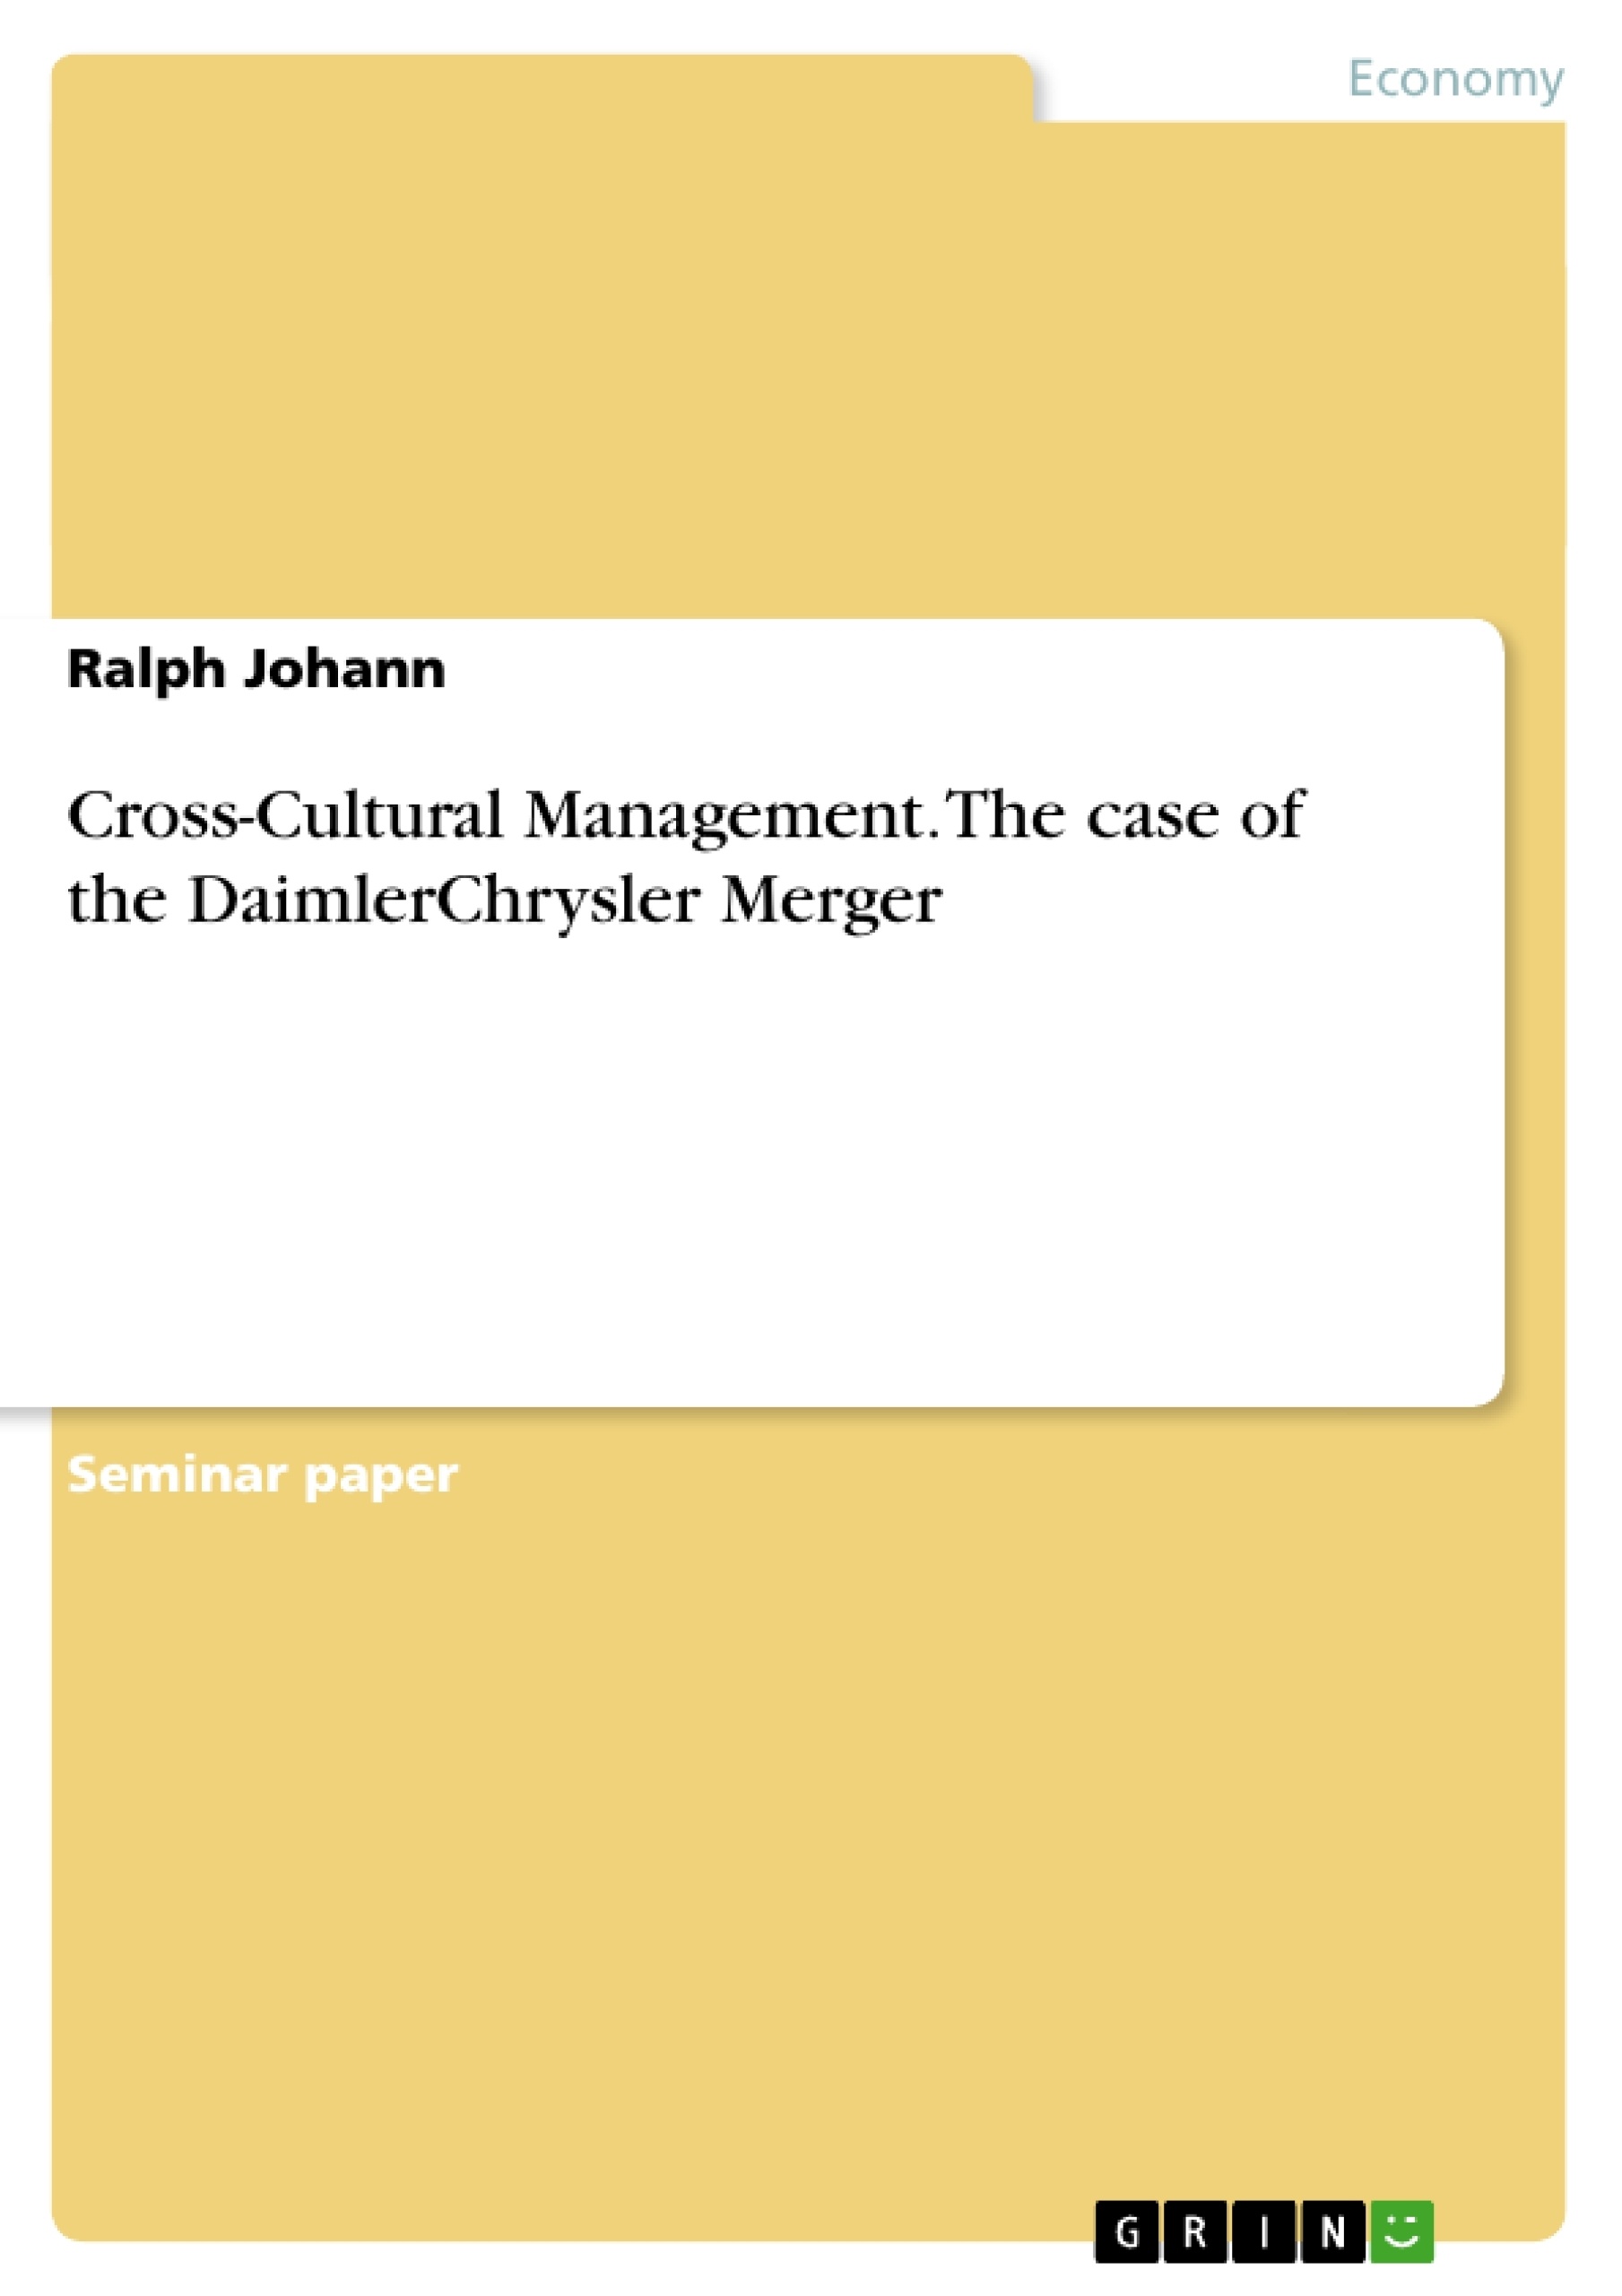 Title: Cross-Cultural Management. The case of the DaimlerChrysler Merger